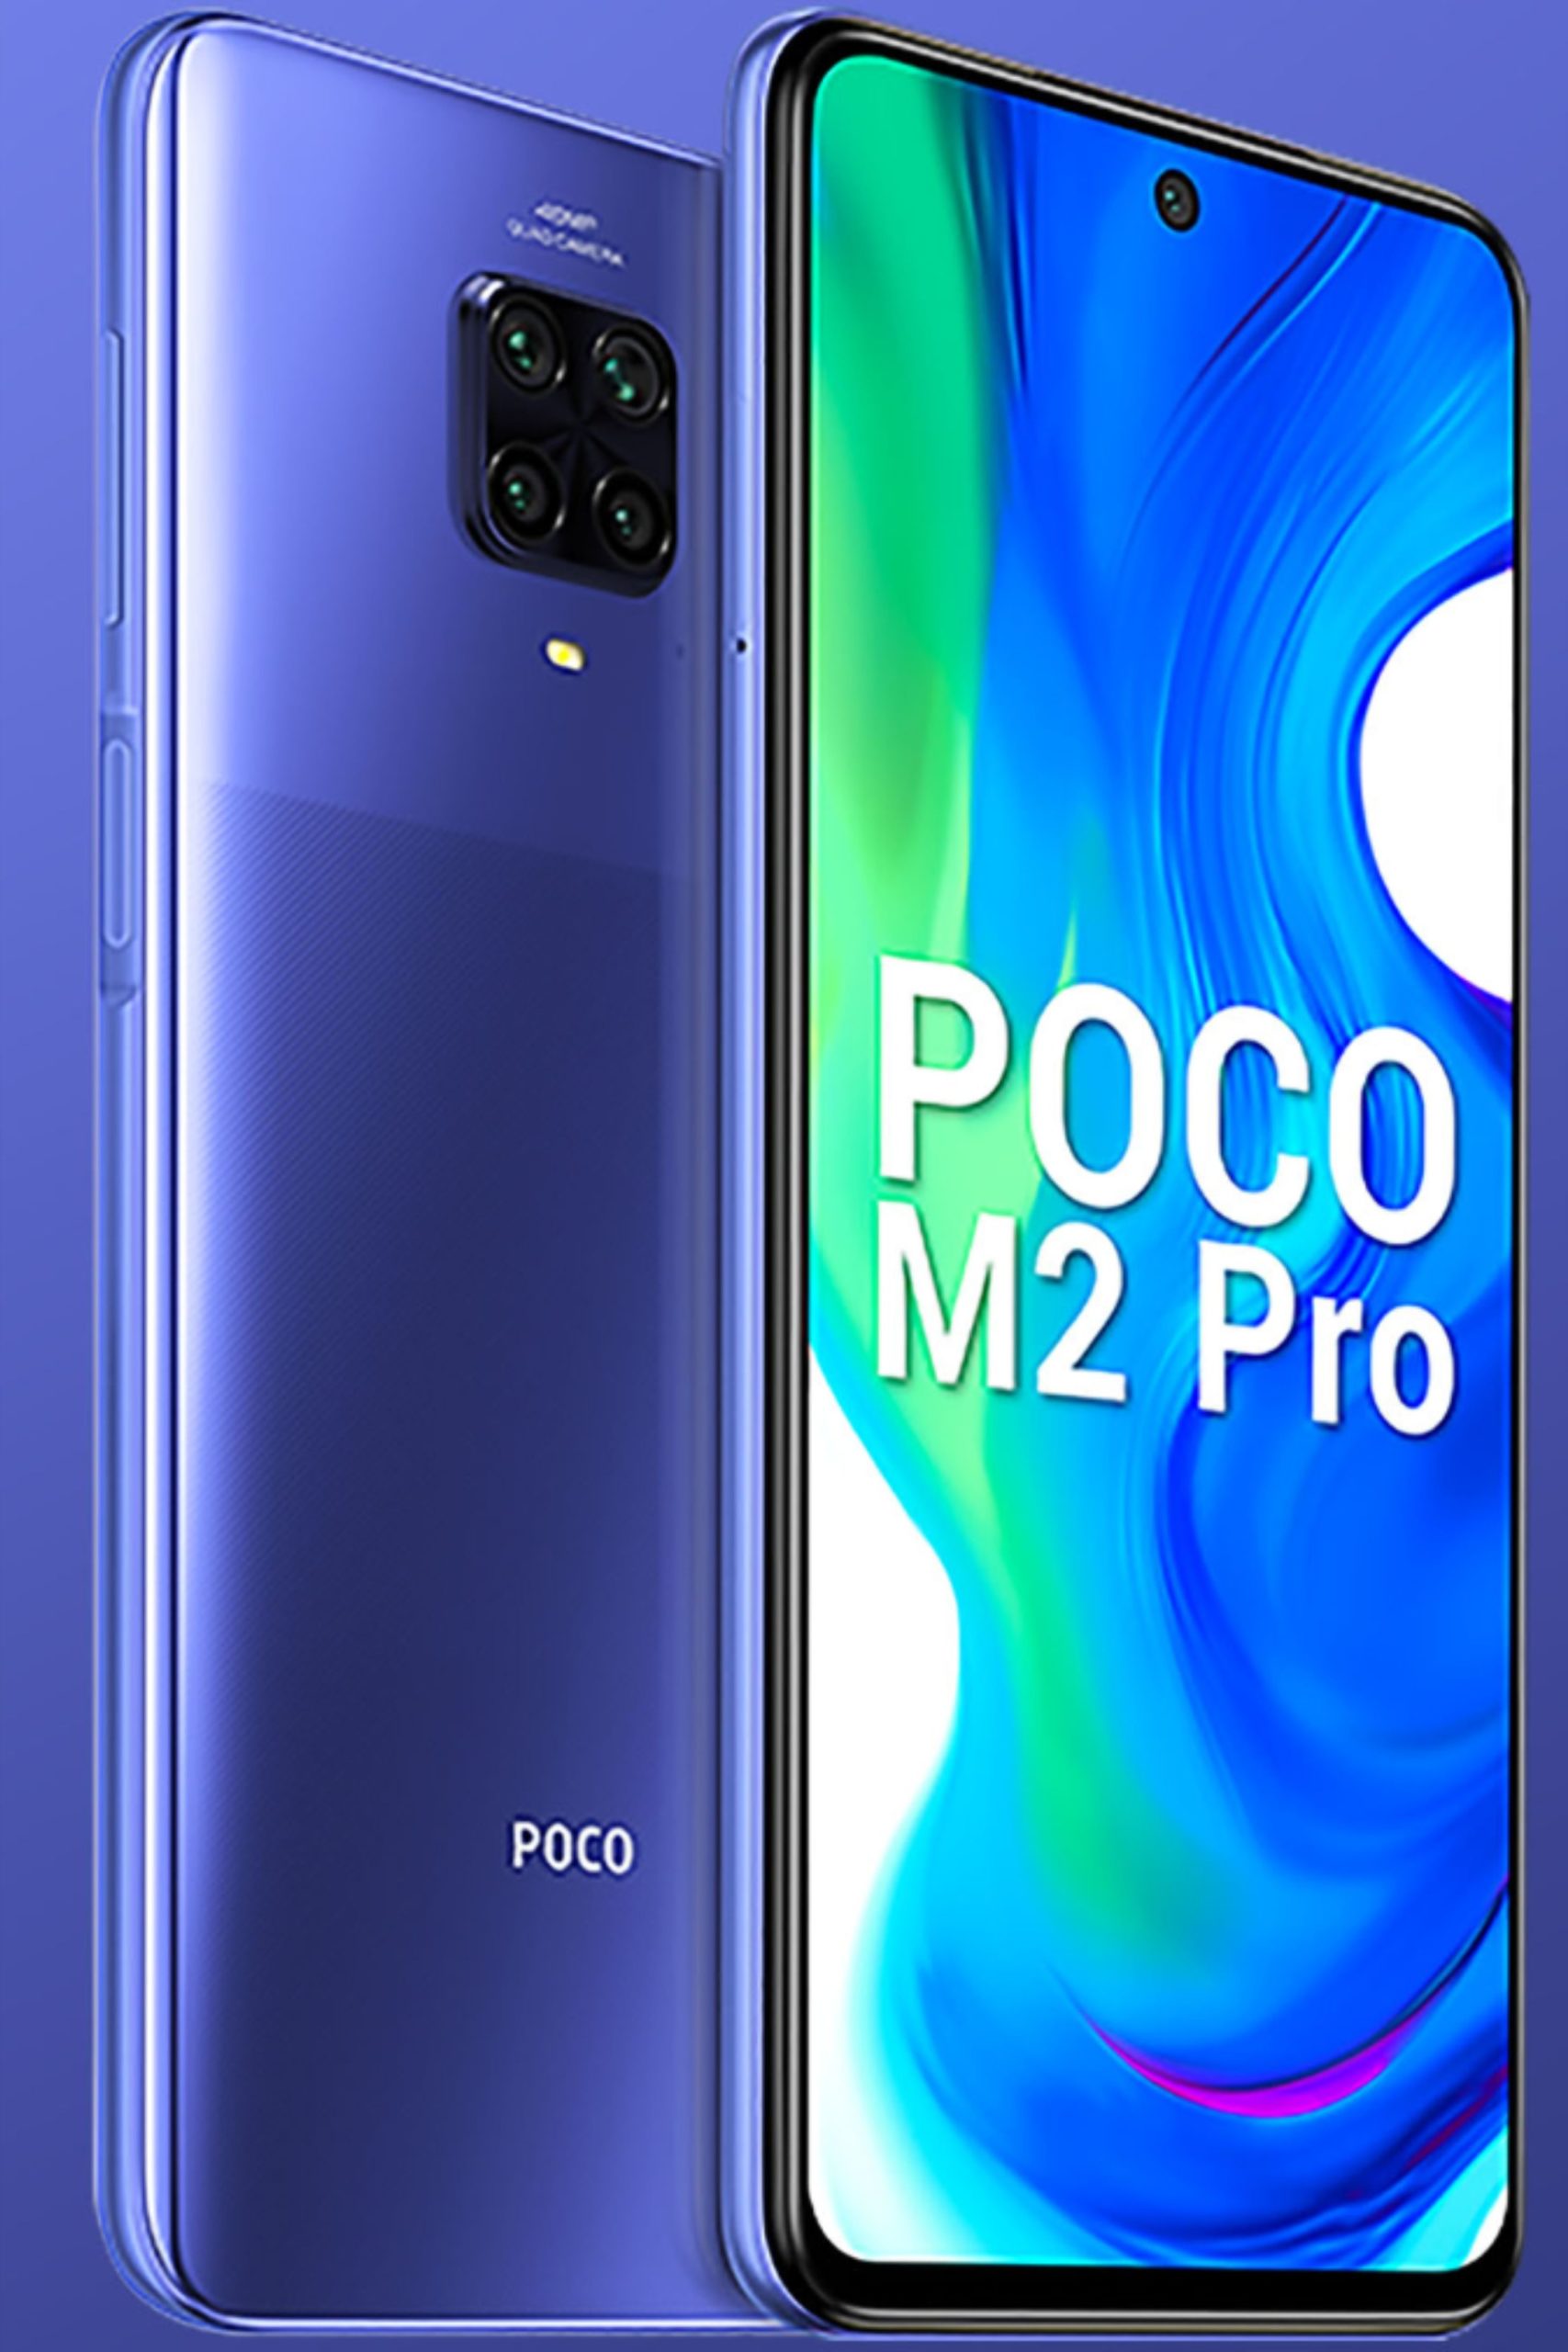 Poco M2 Pro 07 Mobilespecification8 Scaled